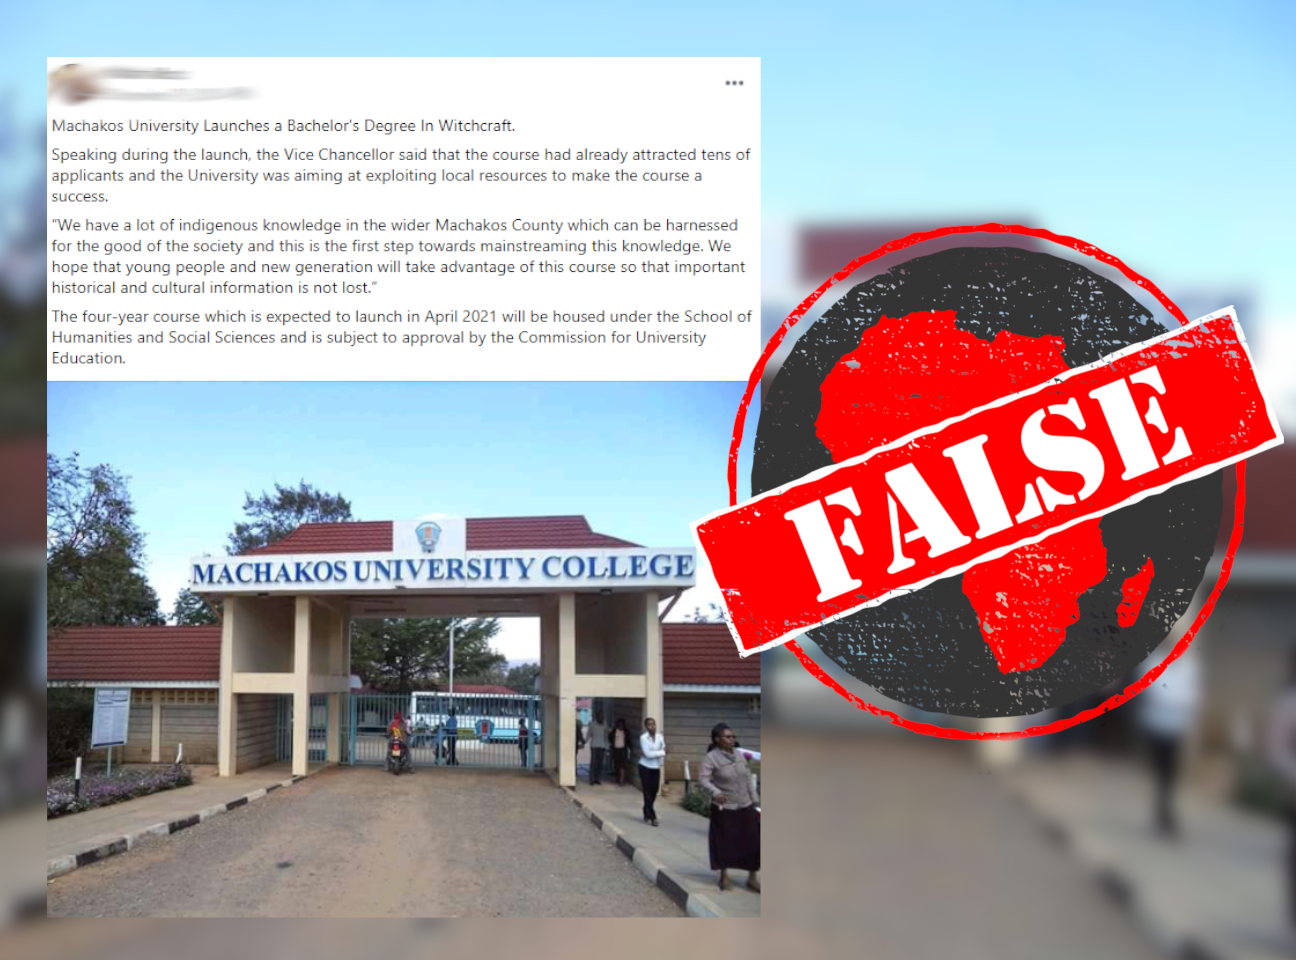 KENYA: Machakos University Refutes Rumors of Offering Witchcraft Degree, Calls Reports Baseless and Malicious